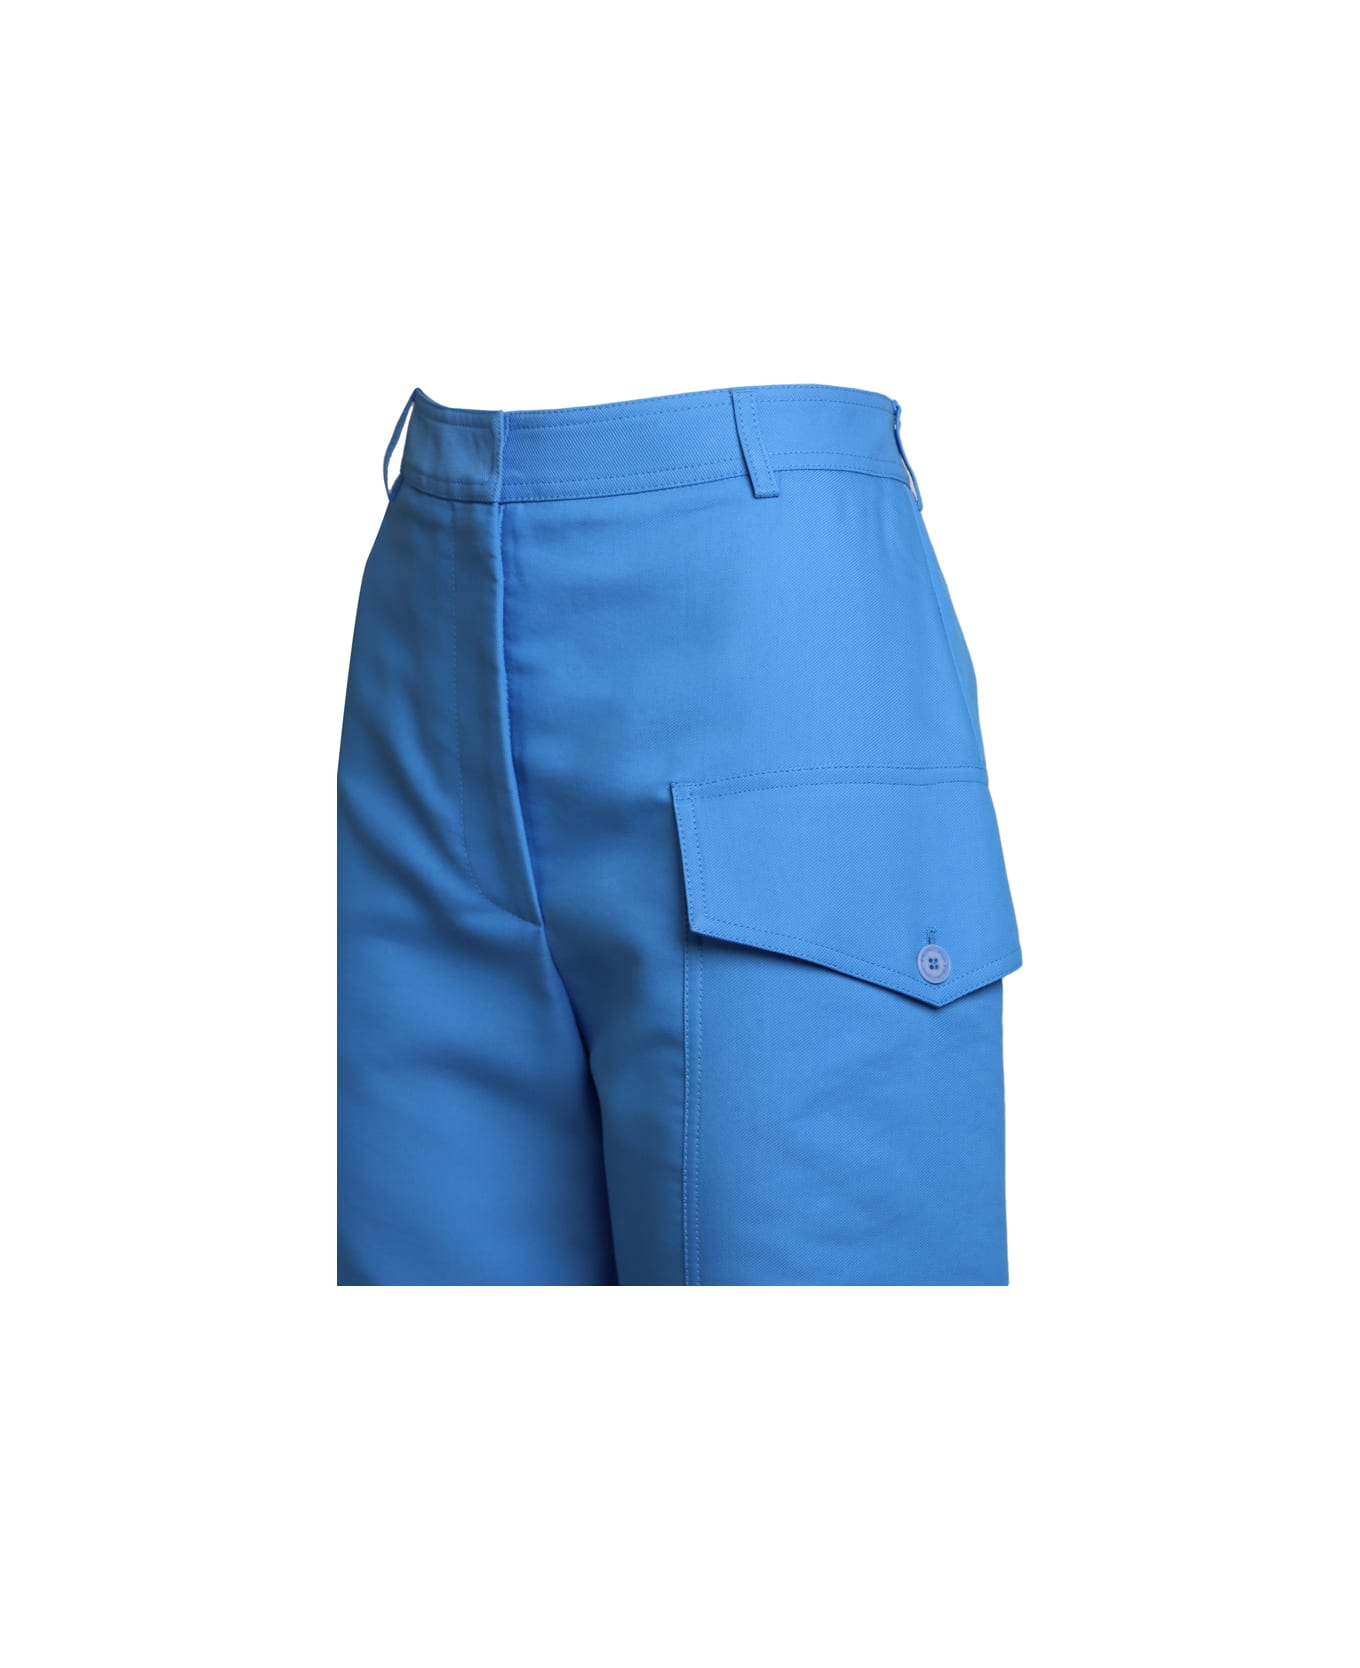 Stella McCartney Cropped Cotton Trousers - Cornflower blue